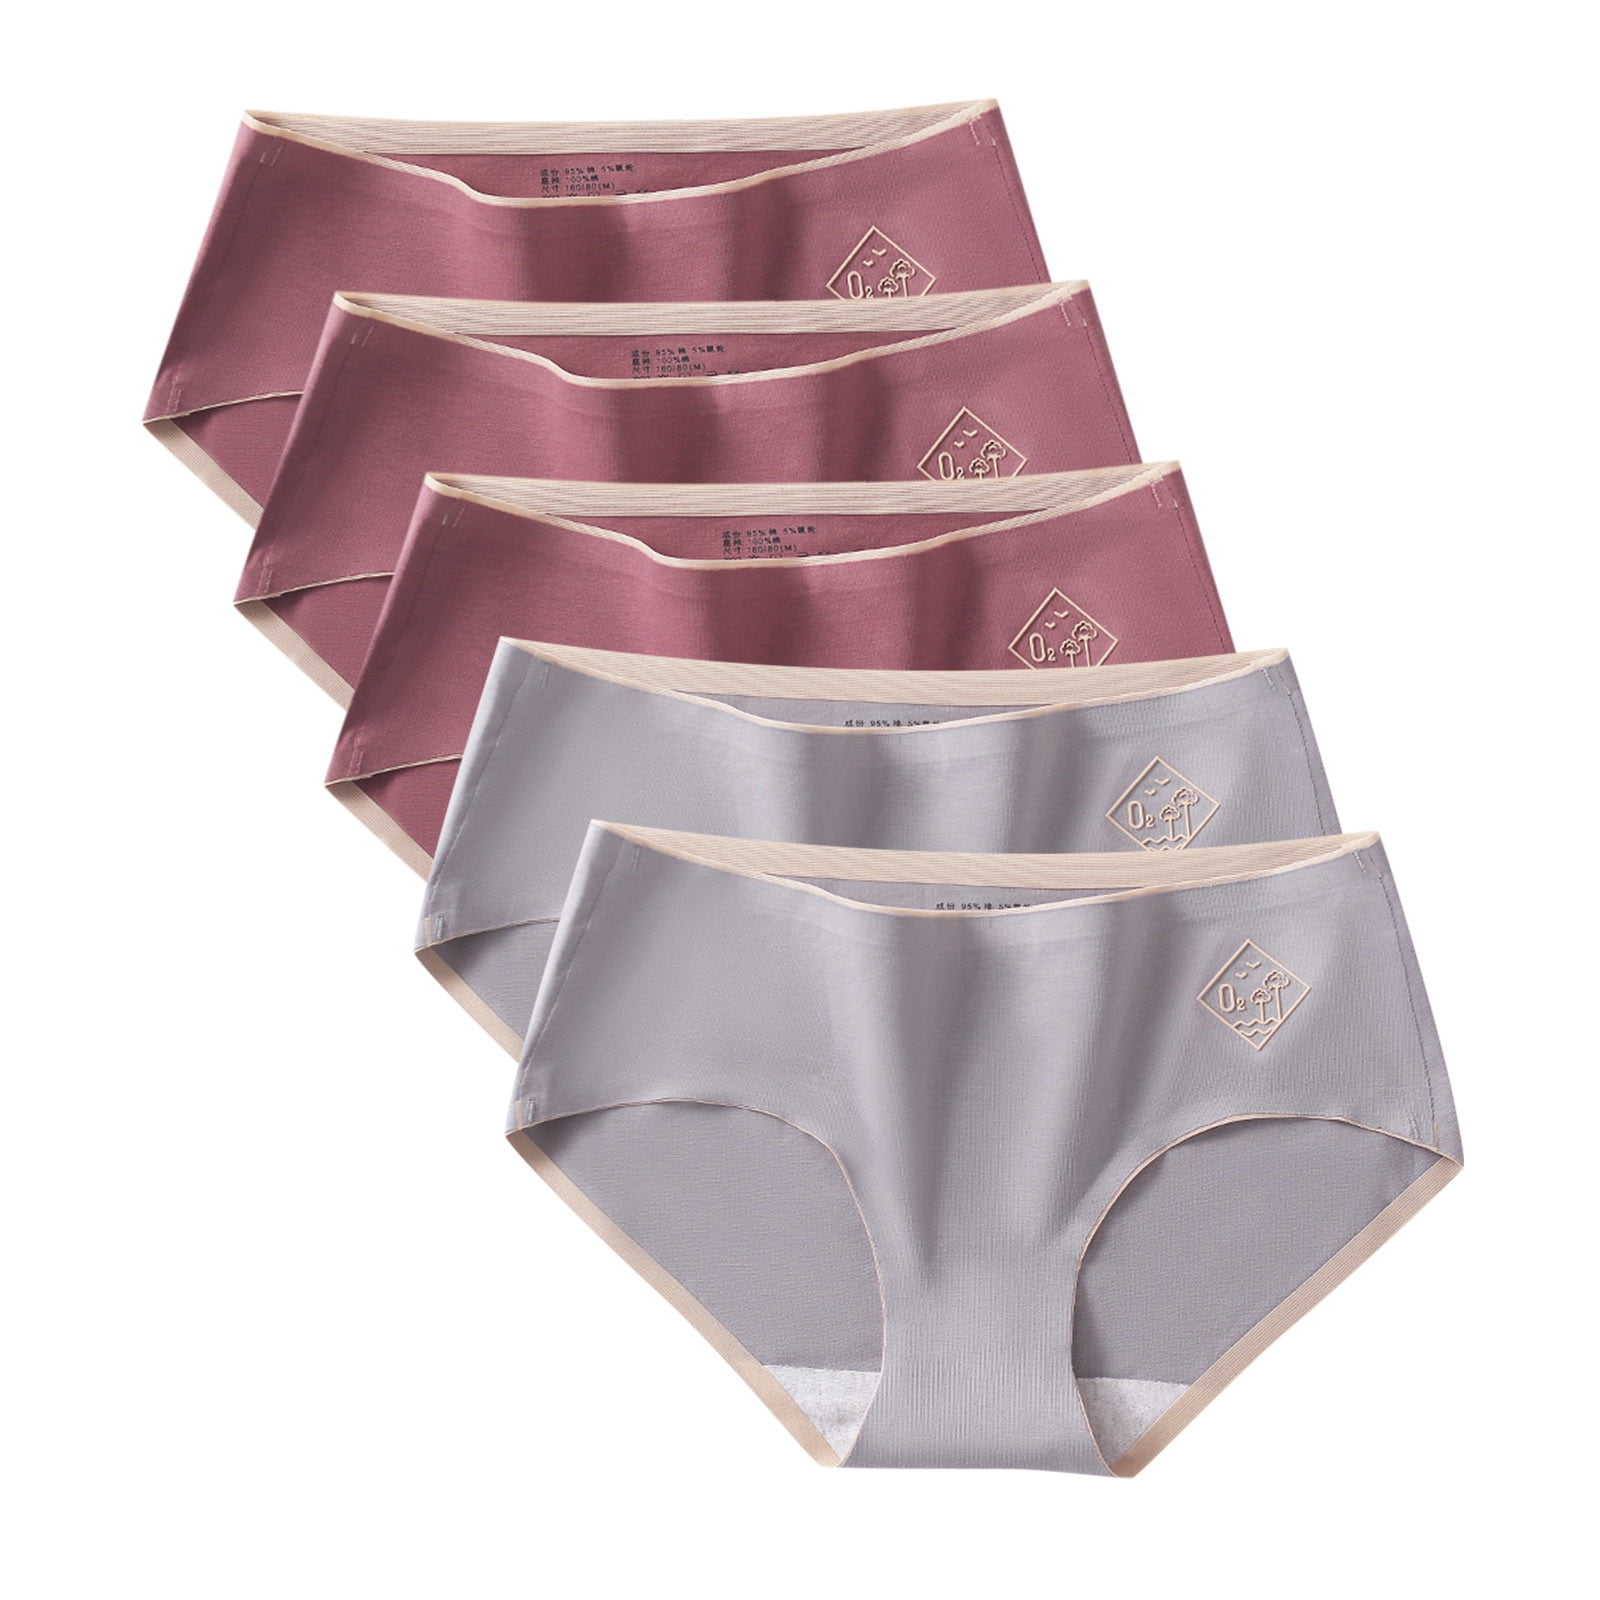 Miarhb Women period cotton brief underwear Women's Thin Briefs In Solid Color With NonTrace MidWaist Underwear 5PC for me